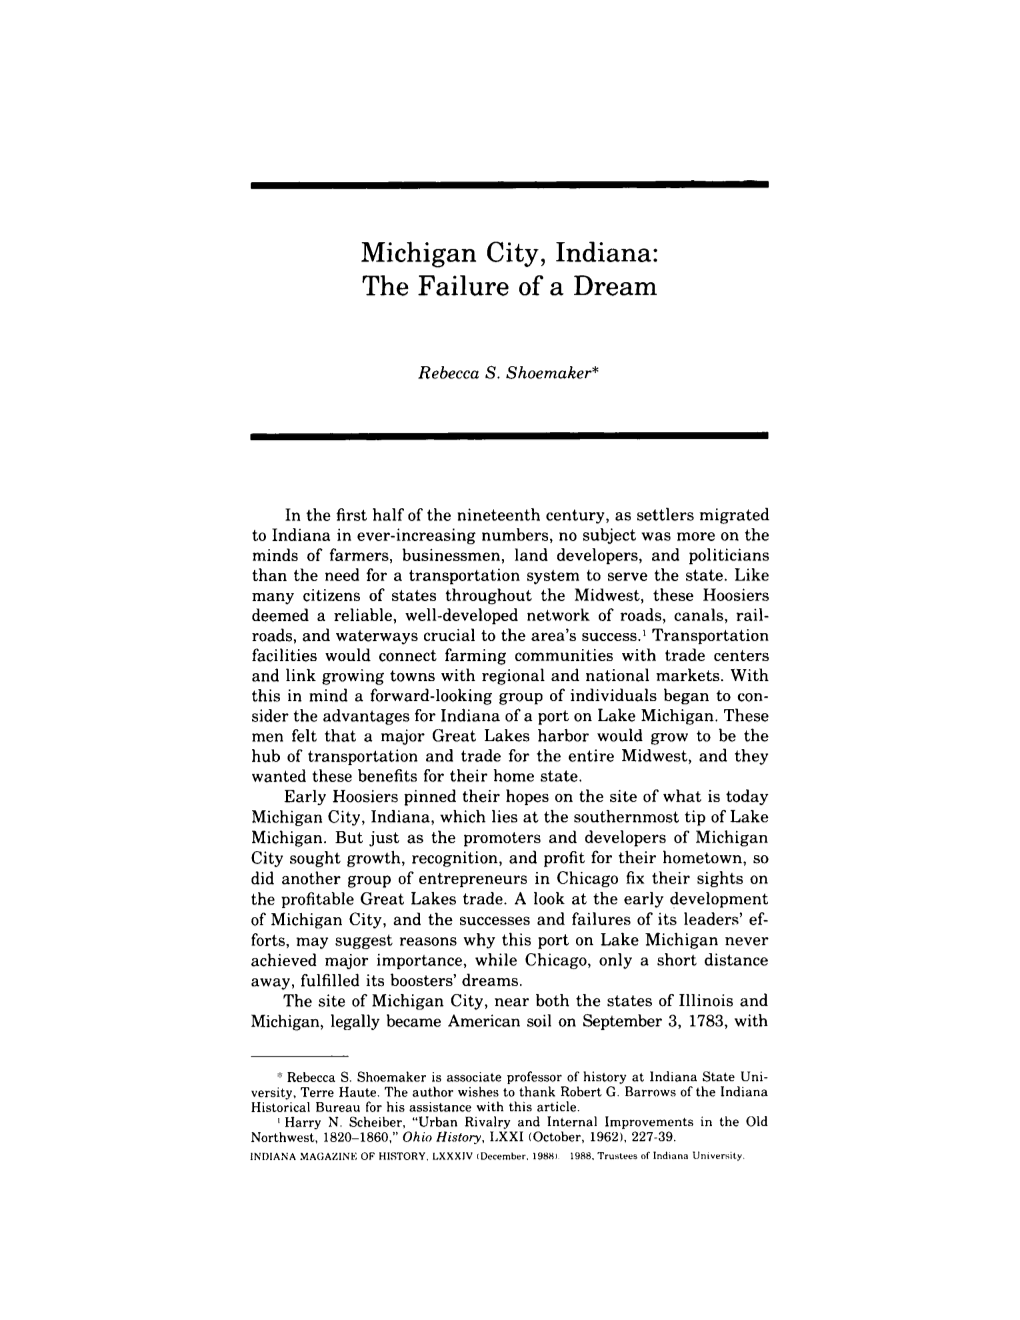 Michigan City, Indiana: the Failure of a Dream